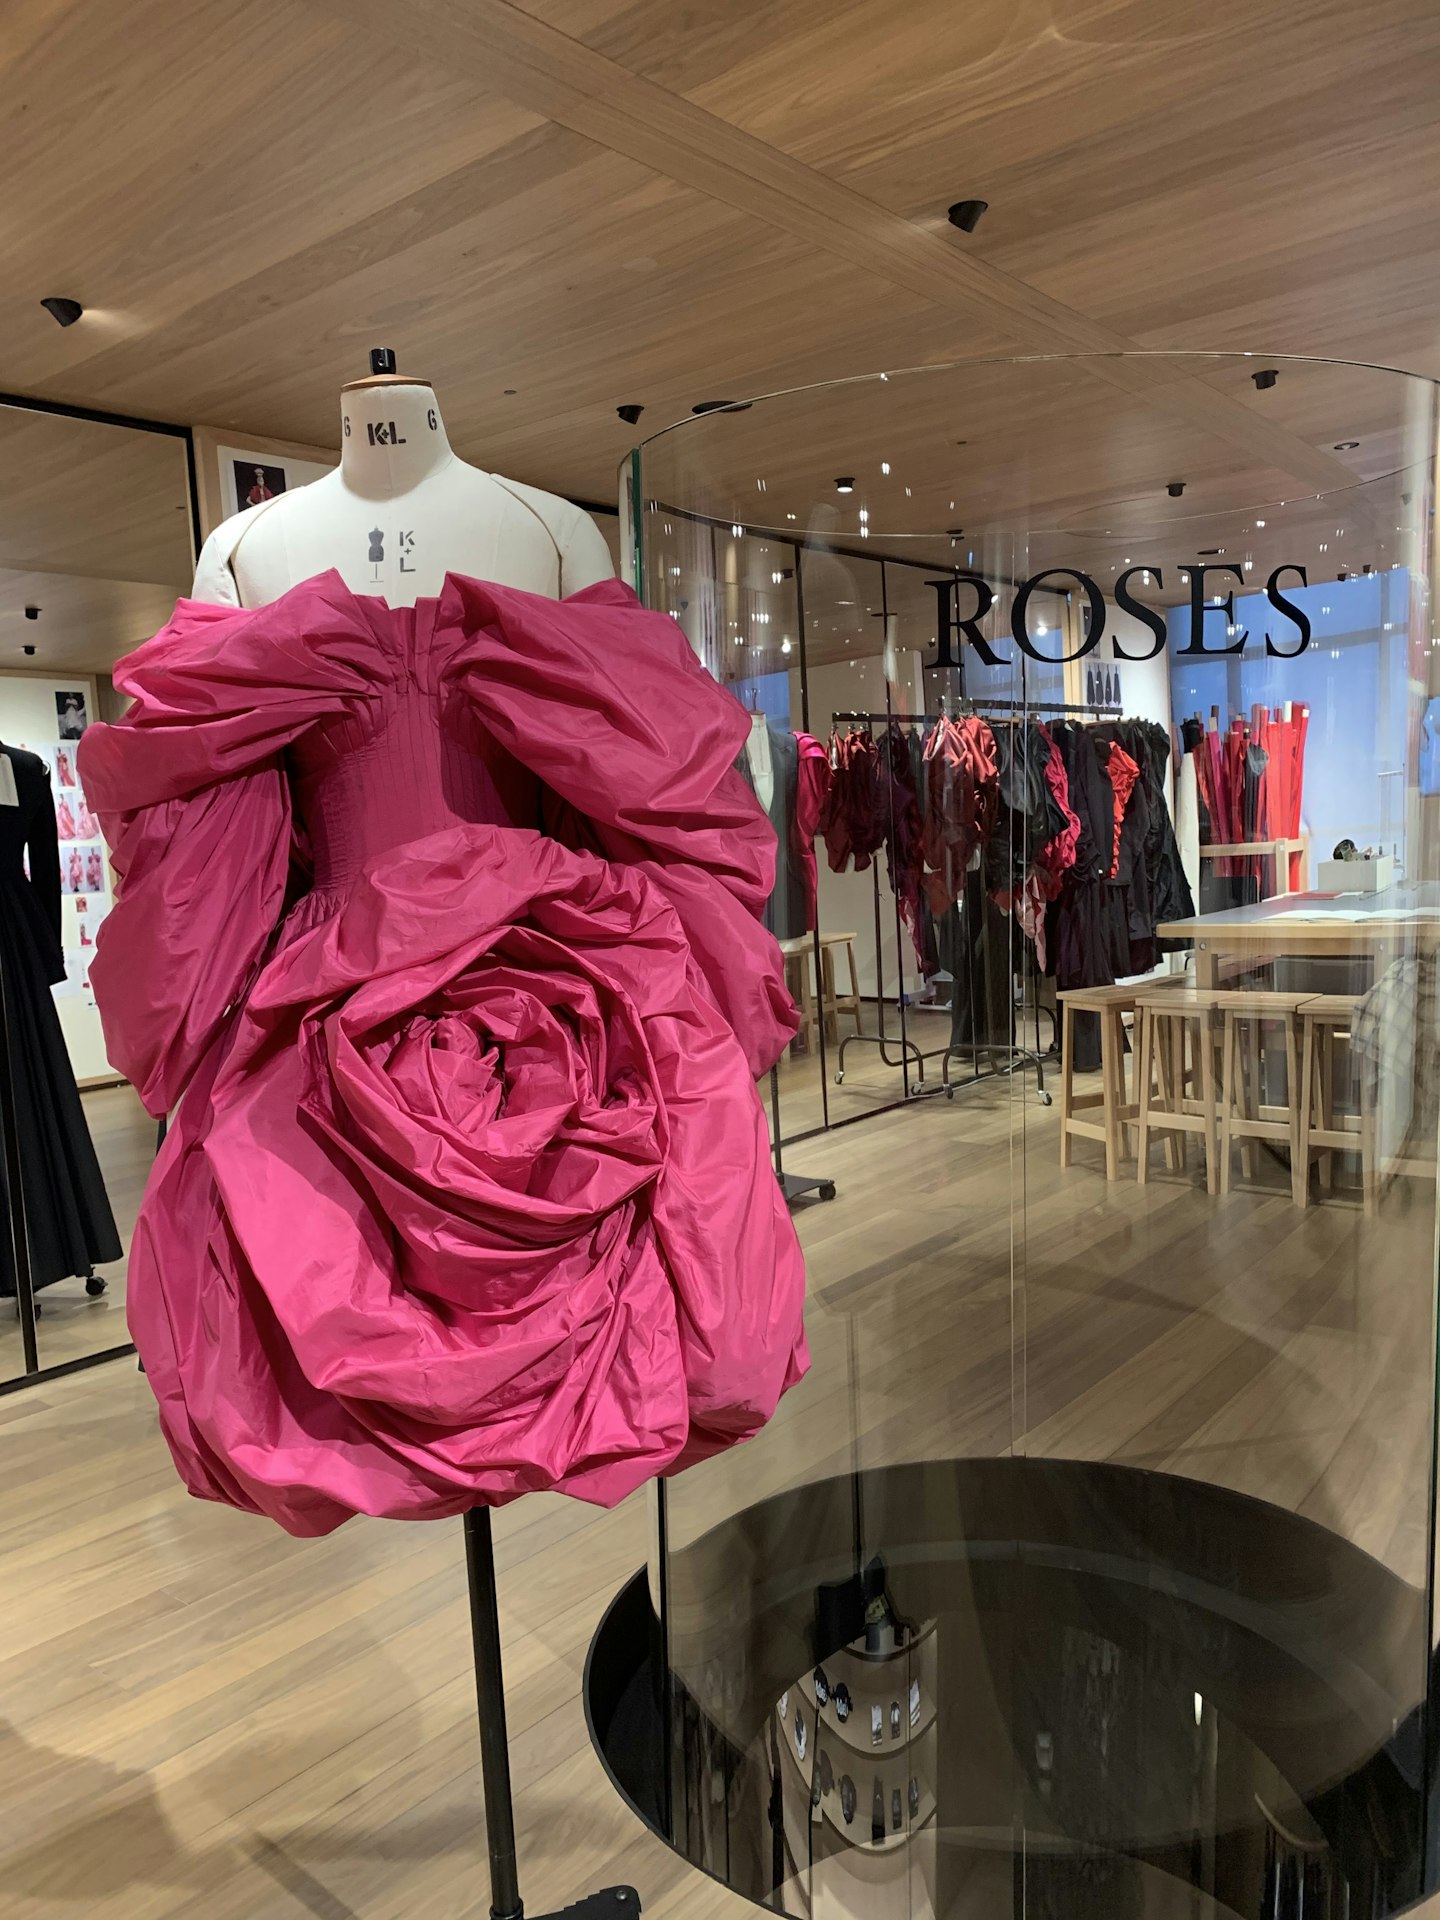 A fuchsia, shorter version of the Rose dress